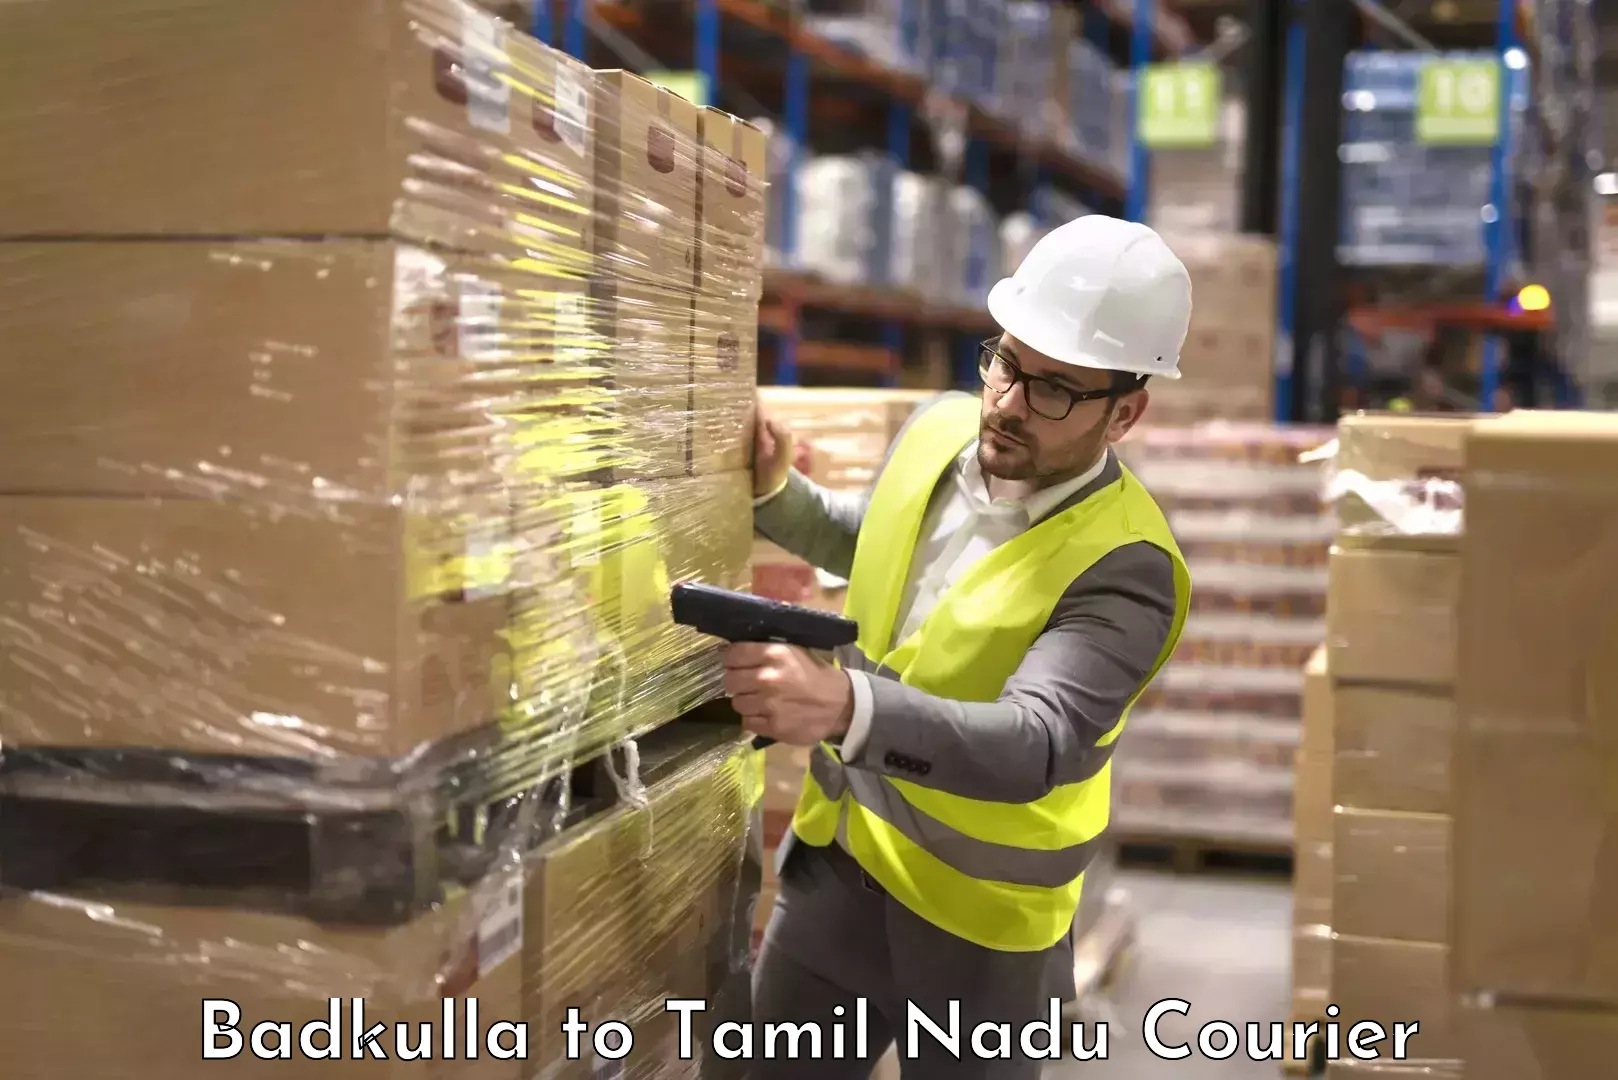 Luggage shipment specialists Badkulla to Tamil Nadu